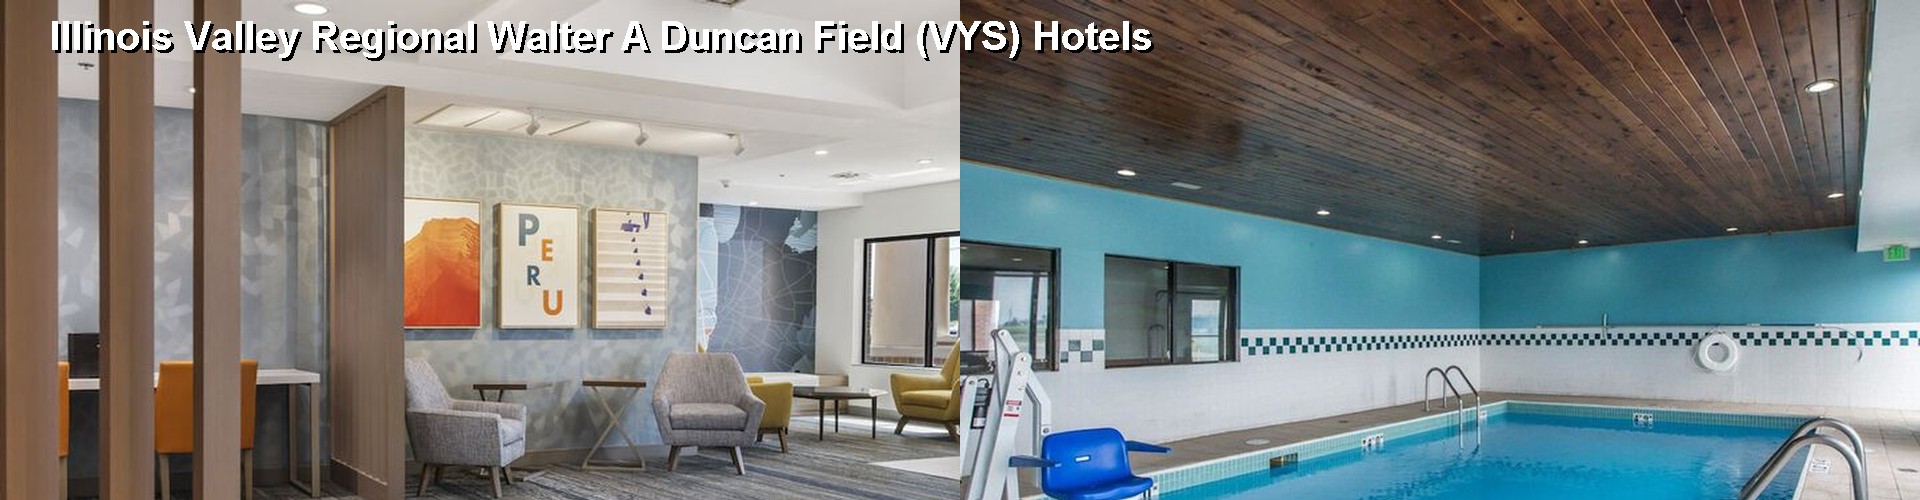 5 Best Hotels near Illinois Valley Regional Walter A Duncan Field (VYS)